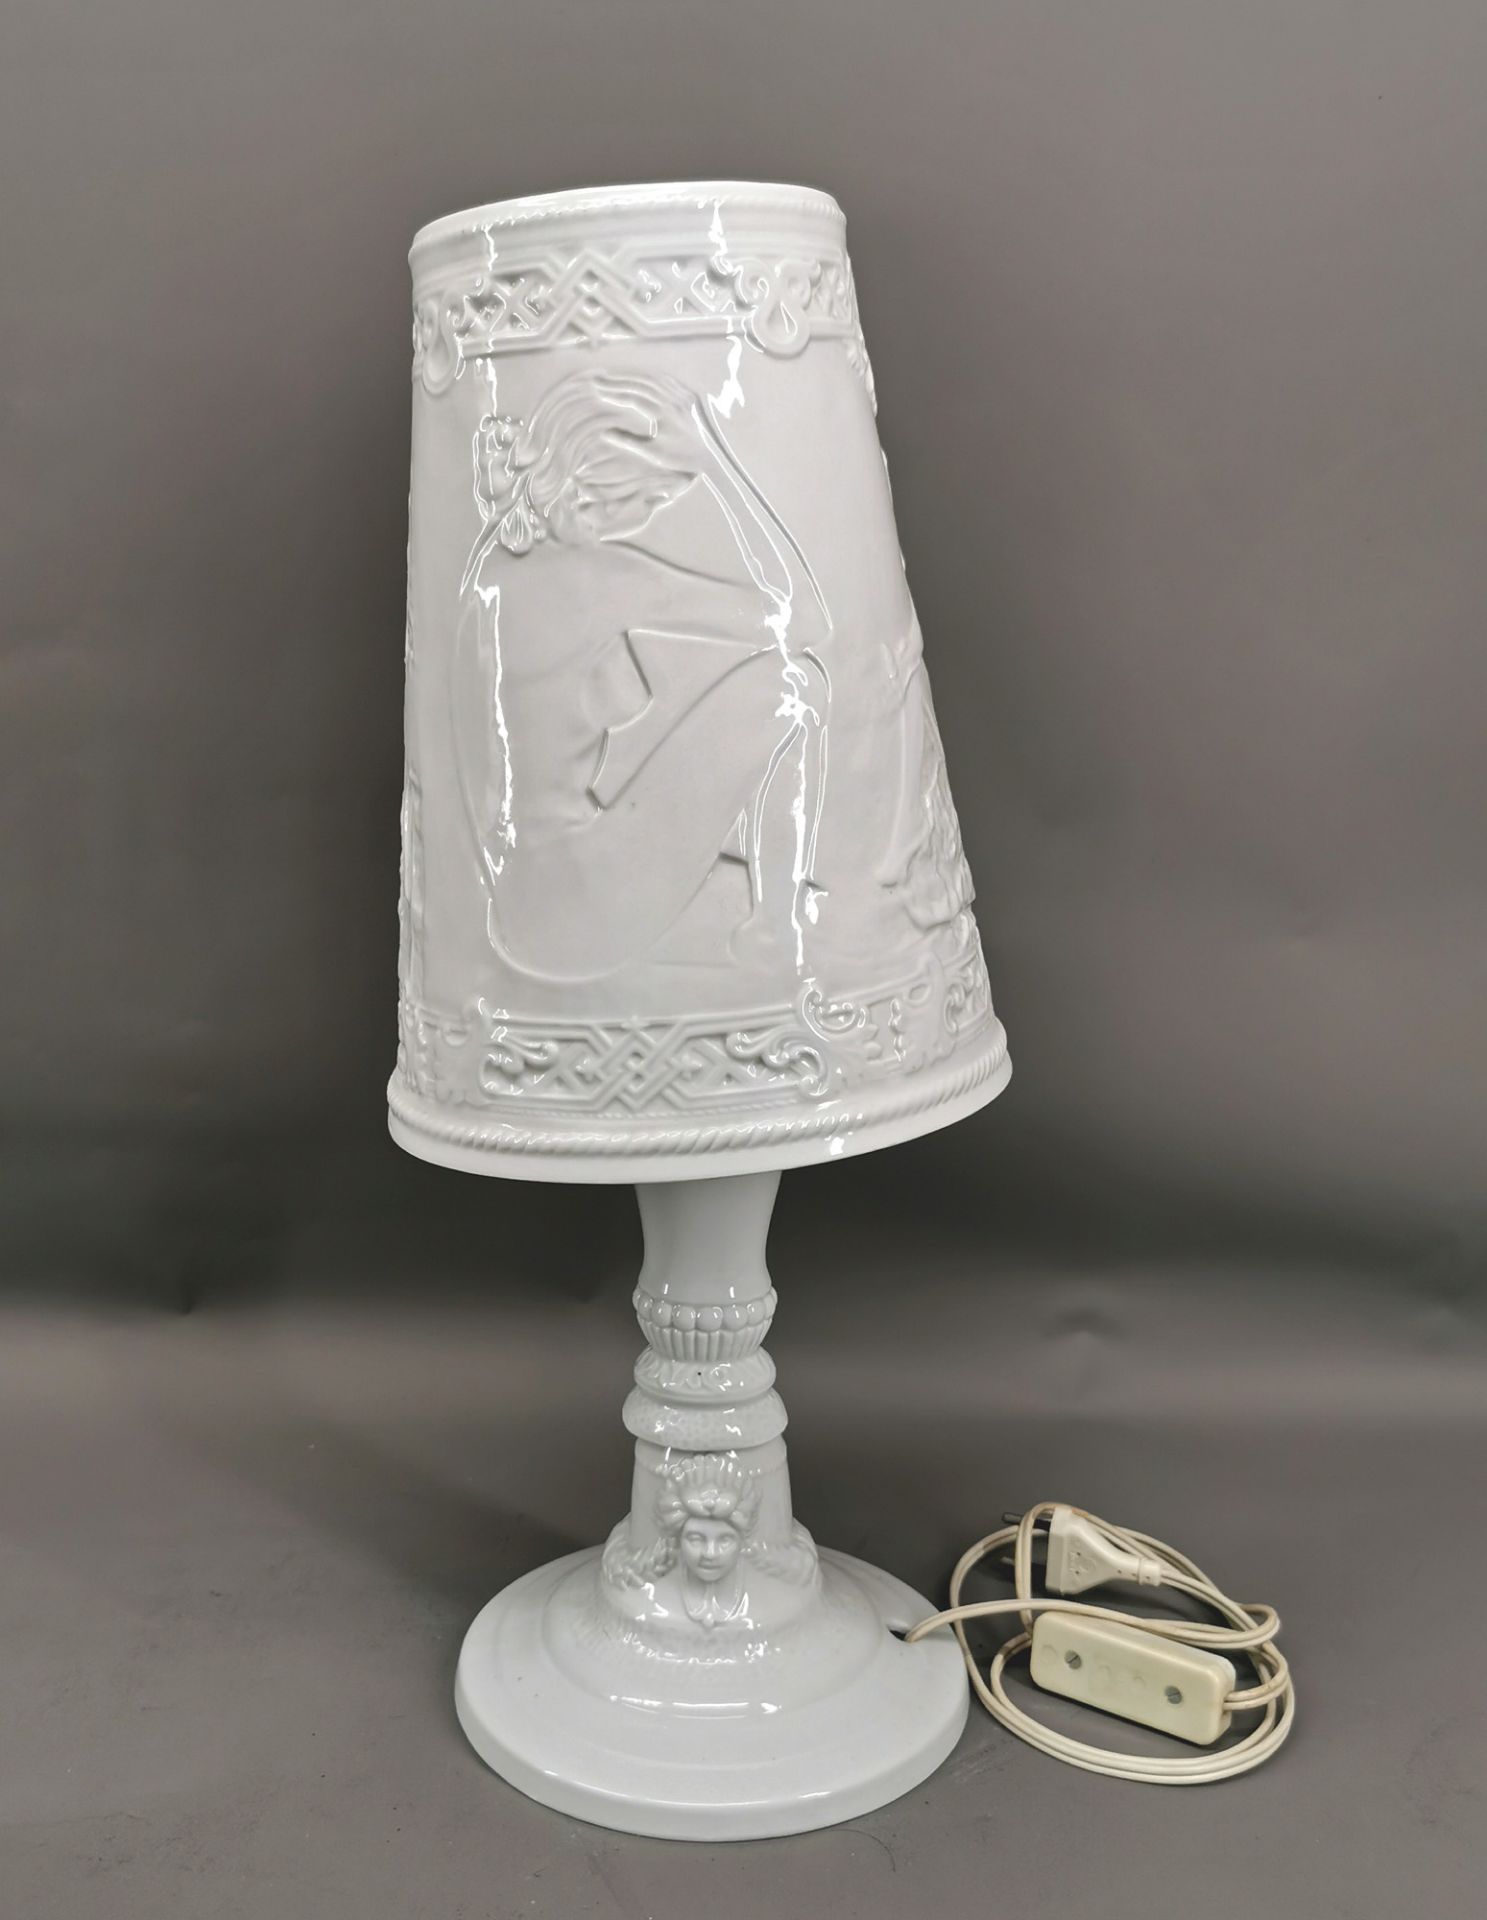 Lithophanie-Lampe Thüringen Frauenakt - Image 2 of 4